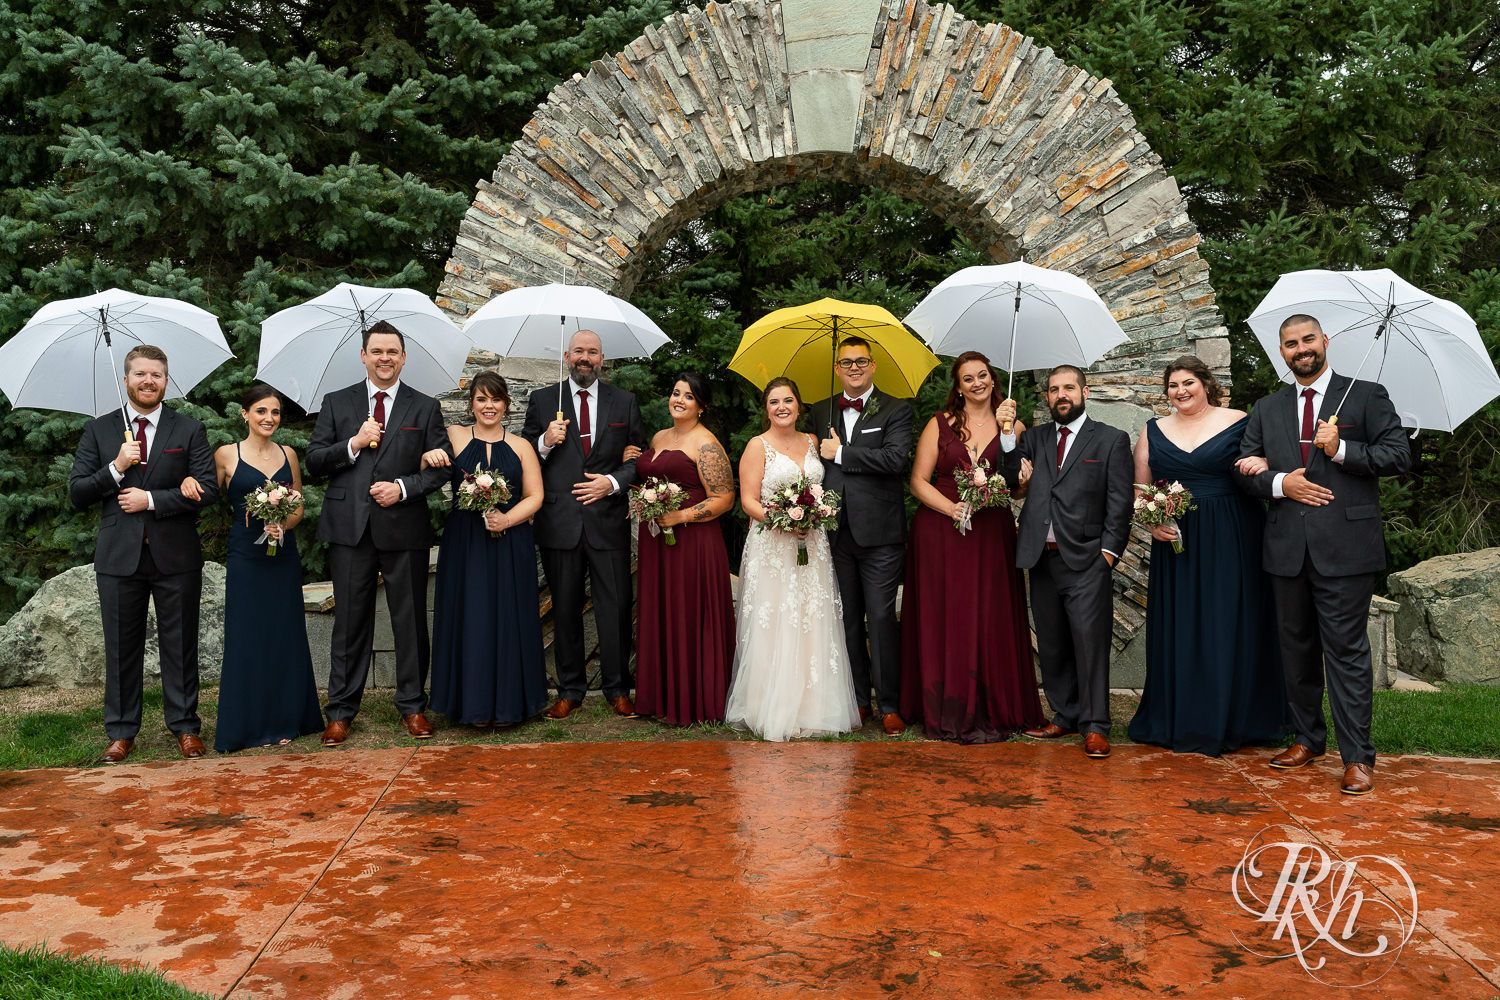 Wedding party with umbrellas on rainy day at Glenhaven Events in Farmington, Minnesota.